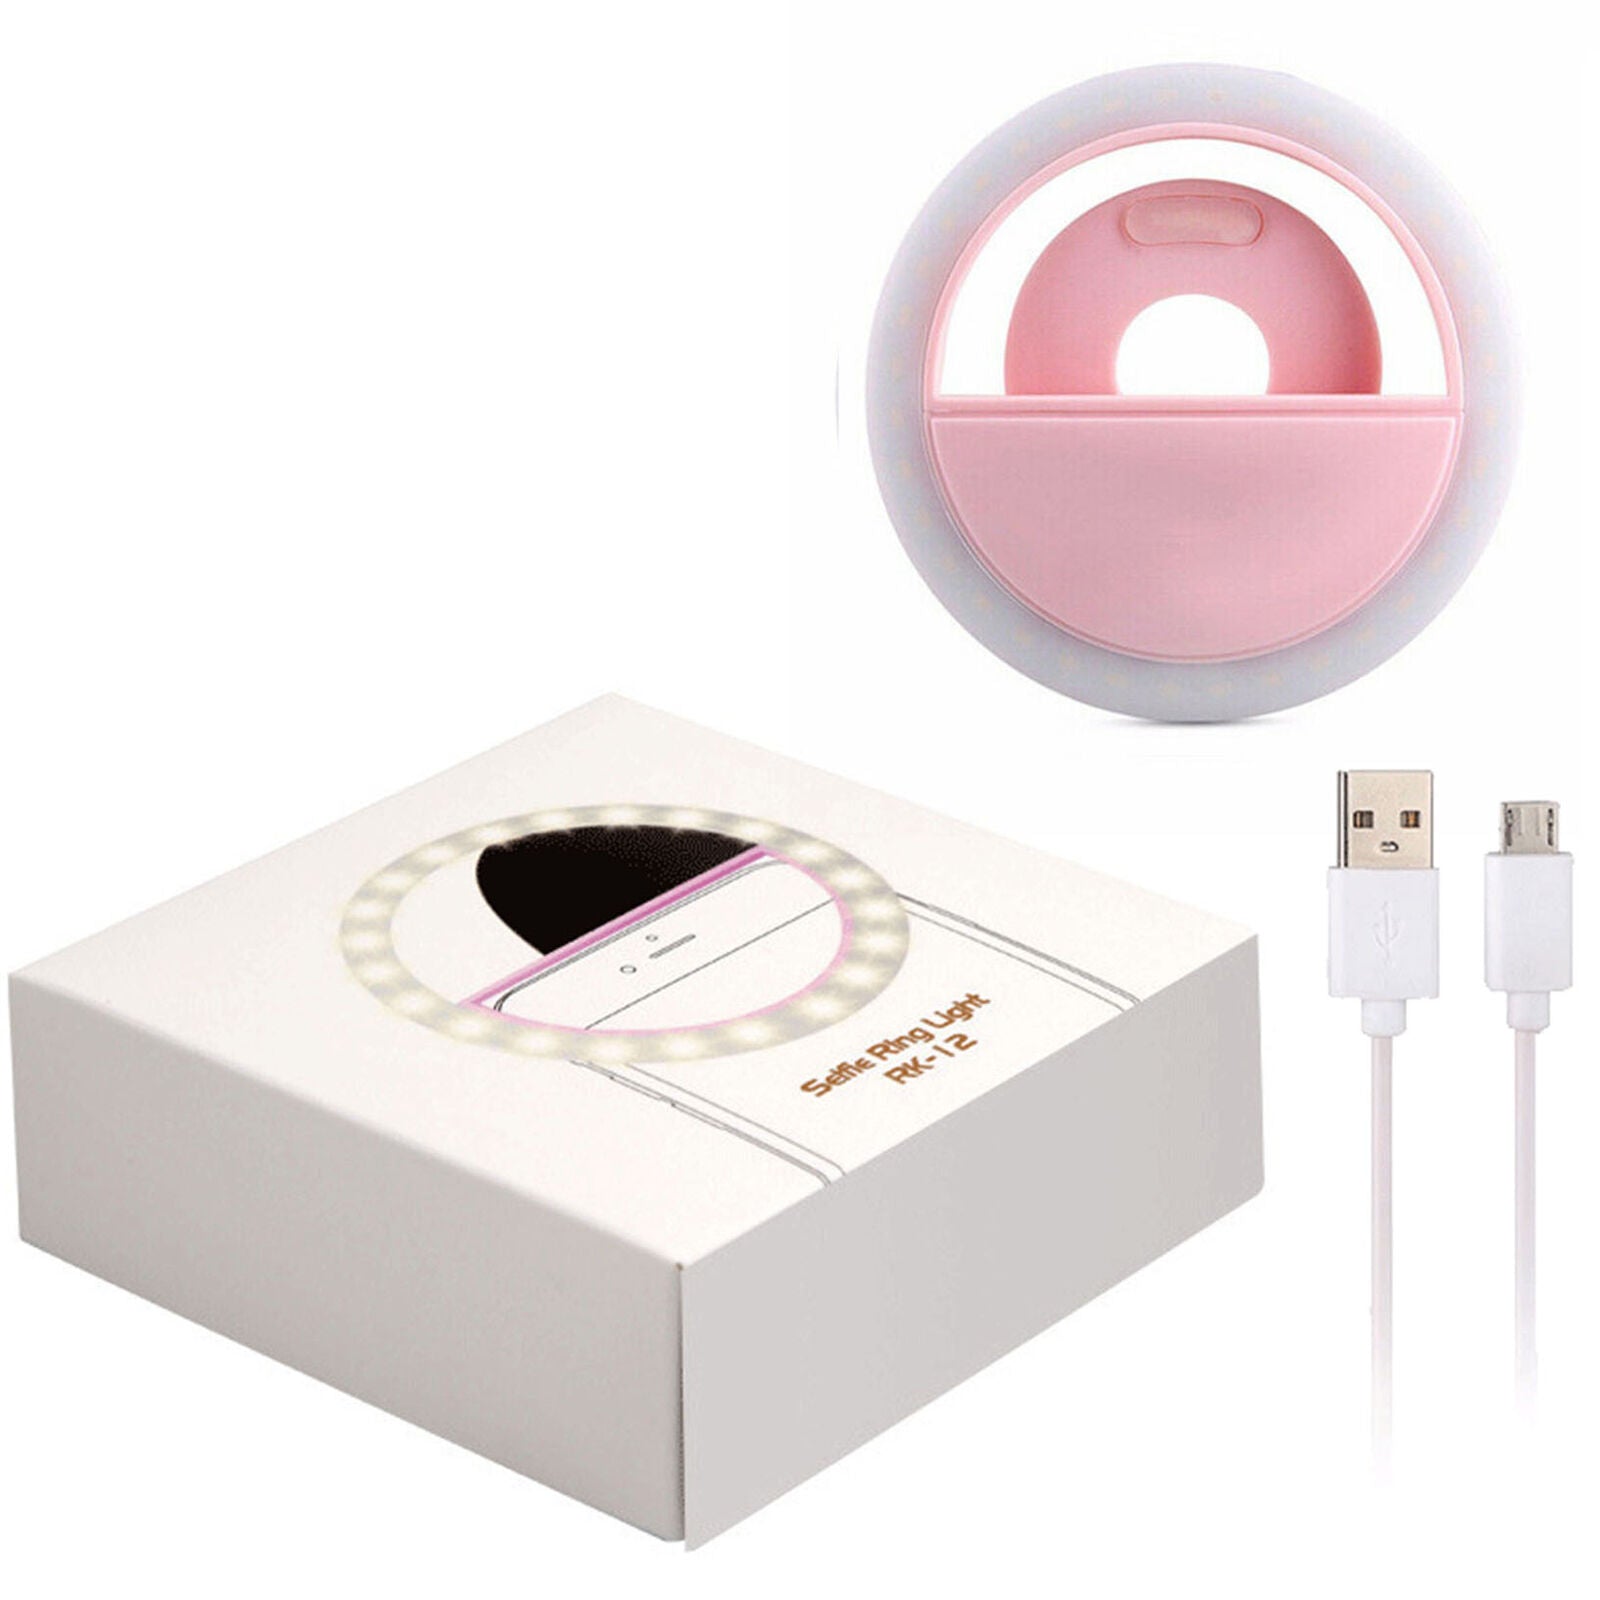 USB Selfie LED Ring Light Flash Fill Clip Camera Adjustable Brightness For Phone